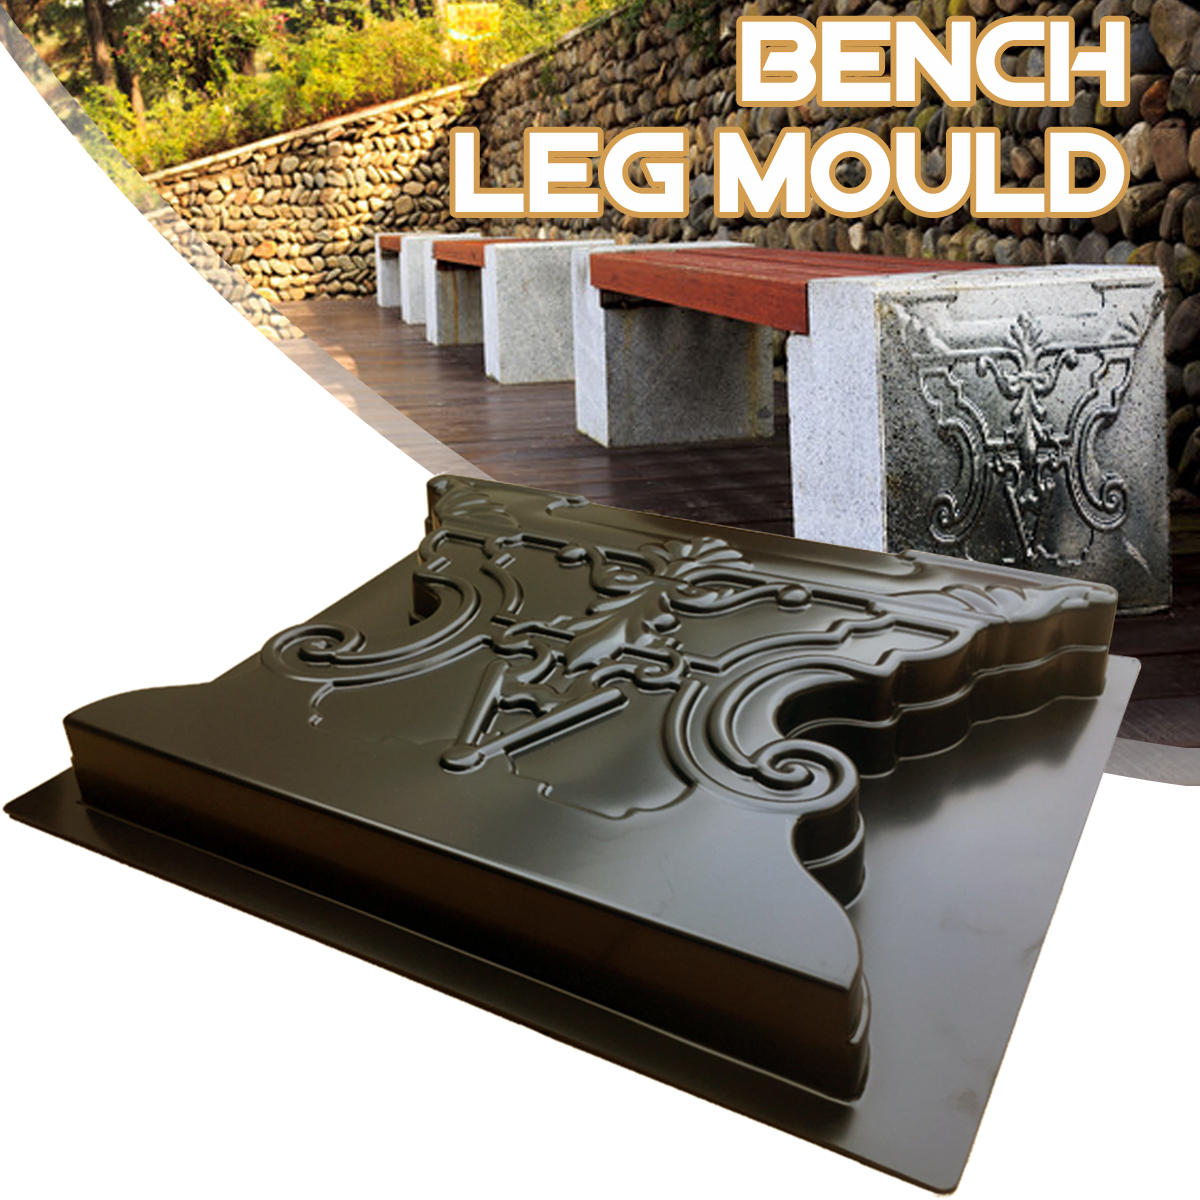 Garden-Bench-Leg-Mould-Stone-Railway-Patio-Path-Concrete-Paving-Cement-Mold-1634584